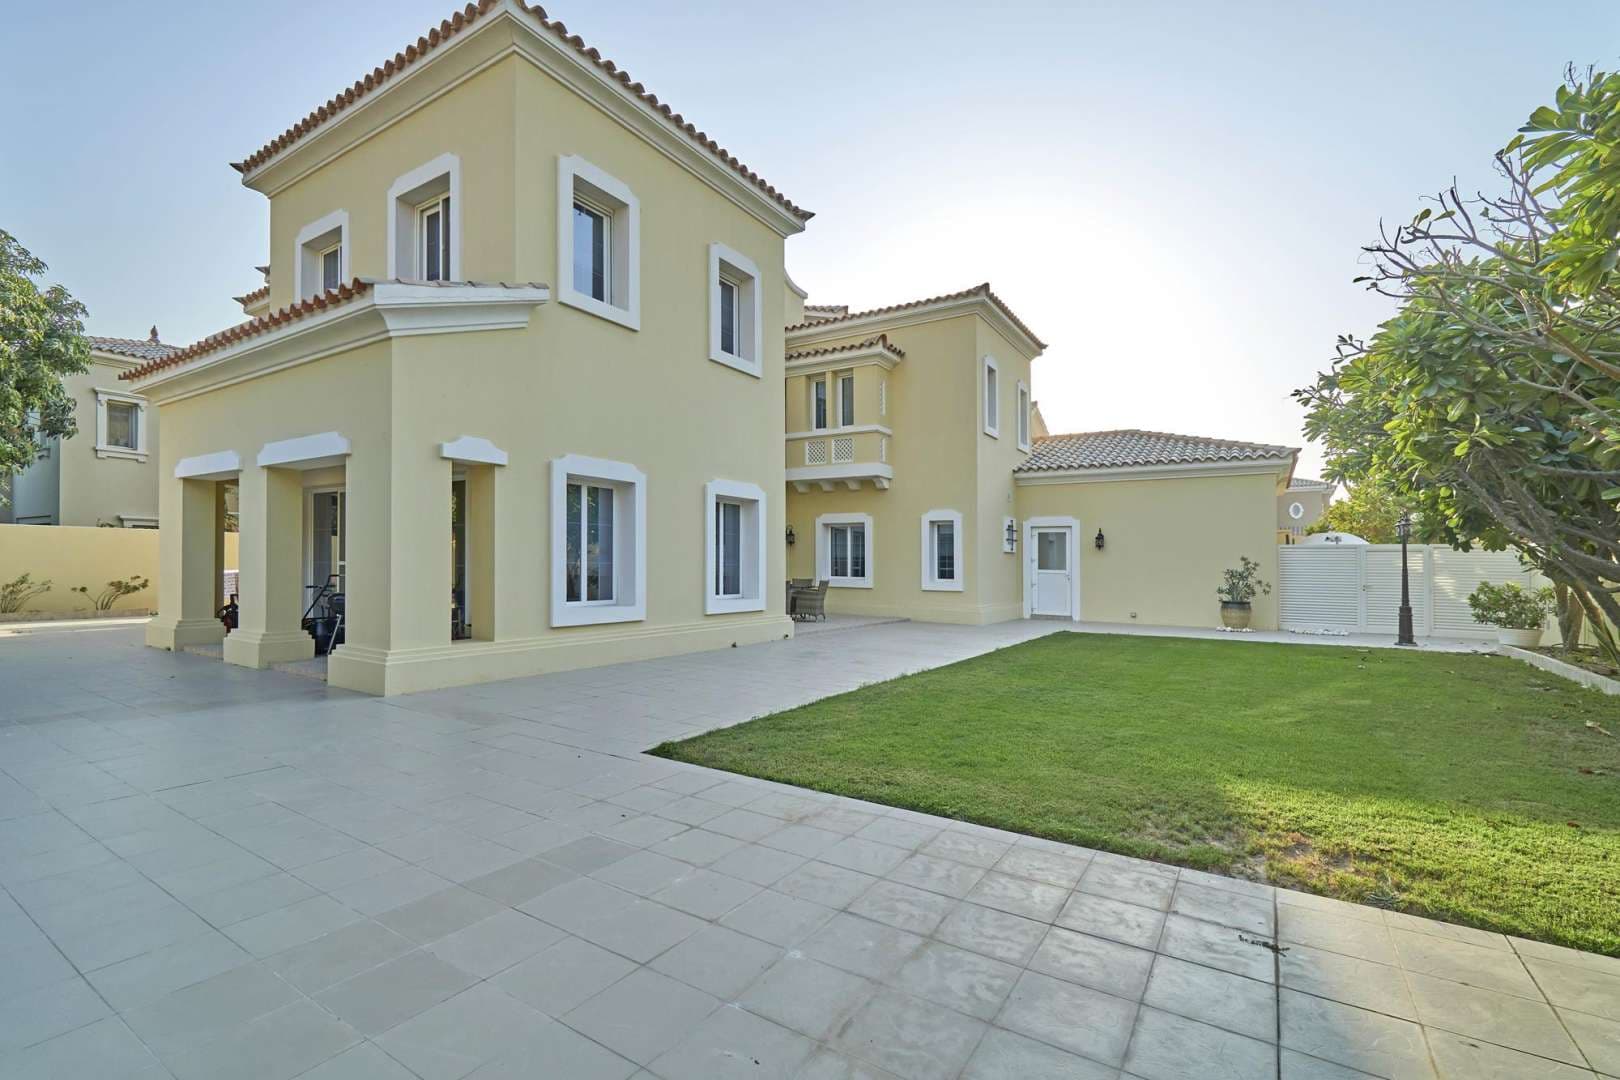  Bedroom Villa For Sale Alvorada Lp05842 2c57a09f9c369000.jpg